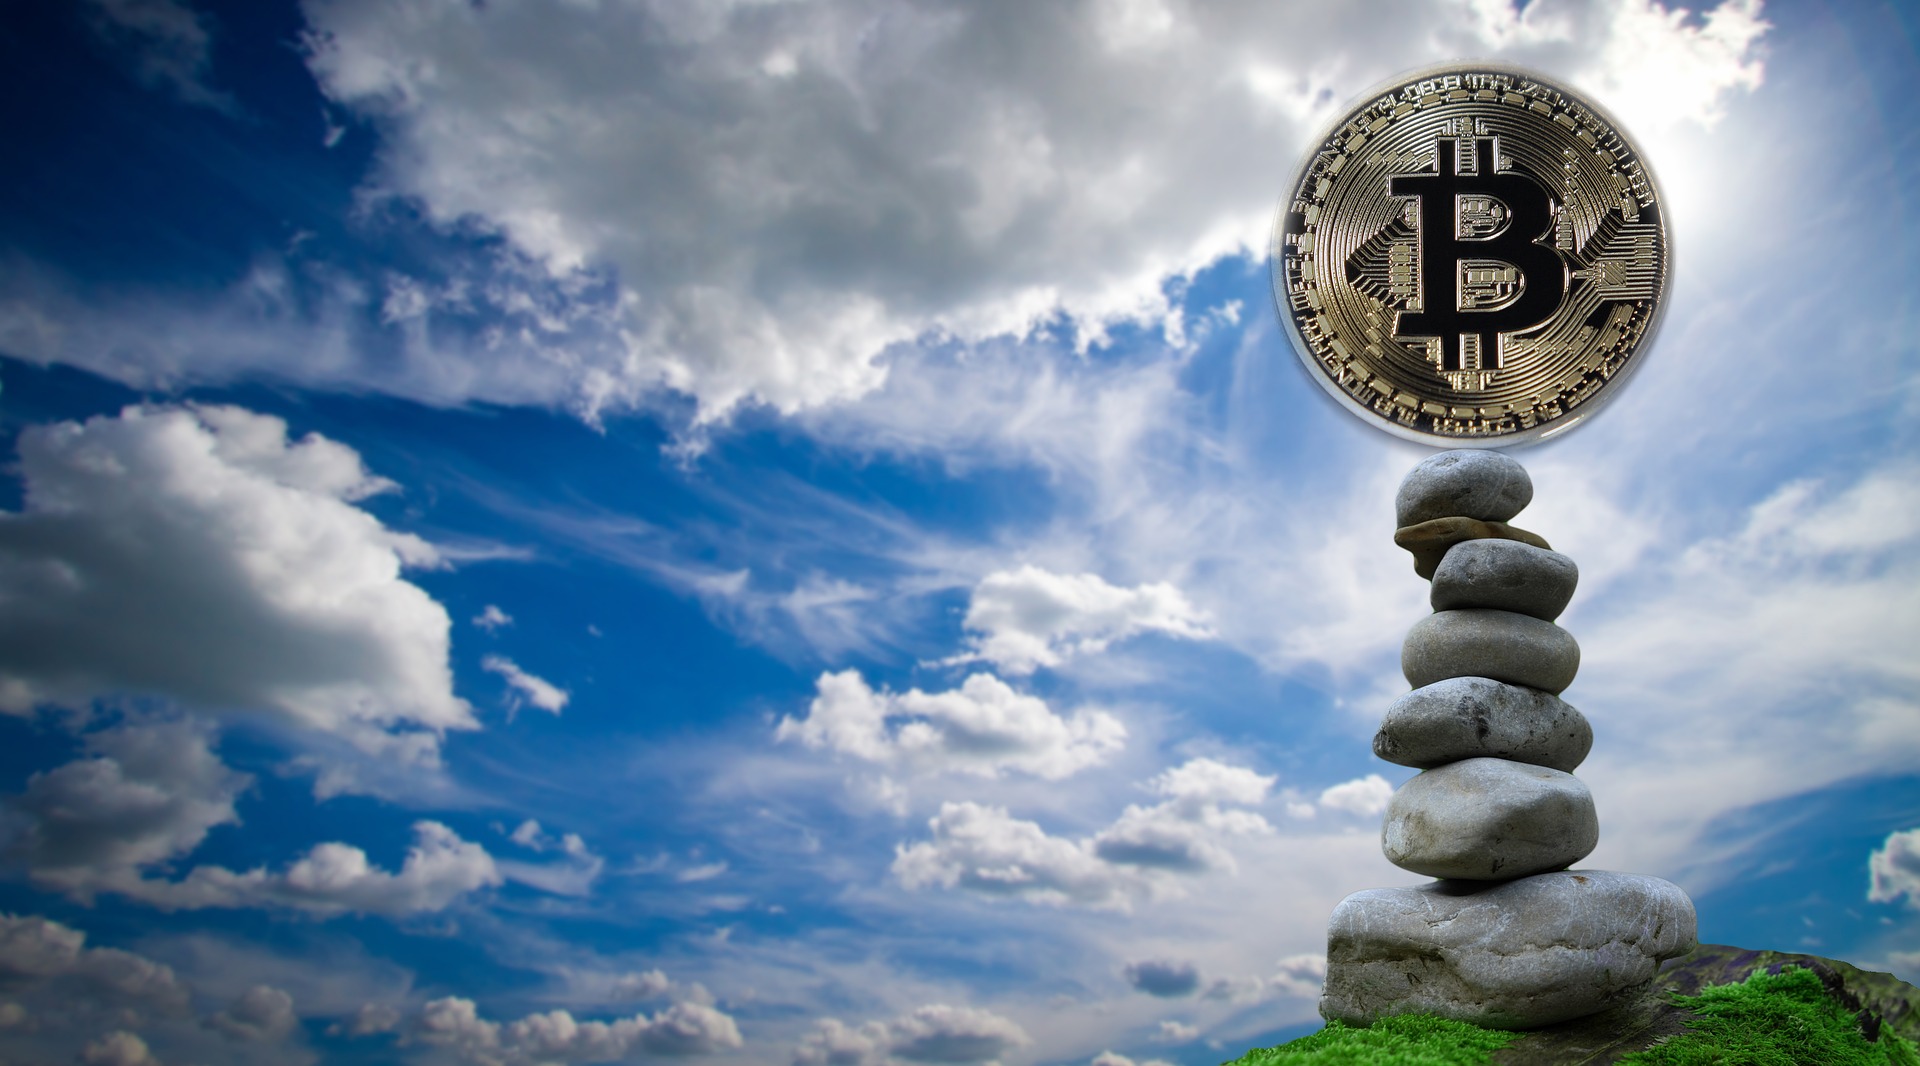 Vitalik Buterin Slams El Salvador for Accepting Bitcoin as Legal Tender